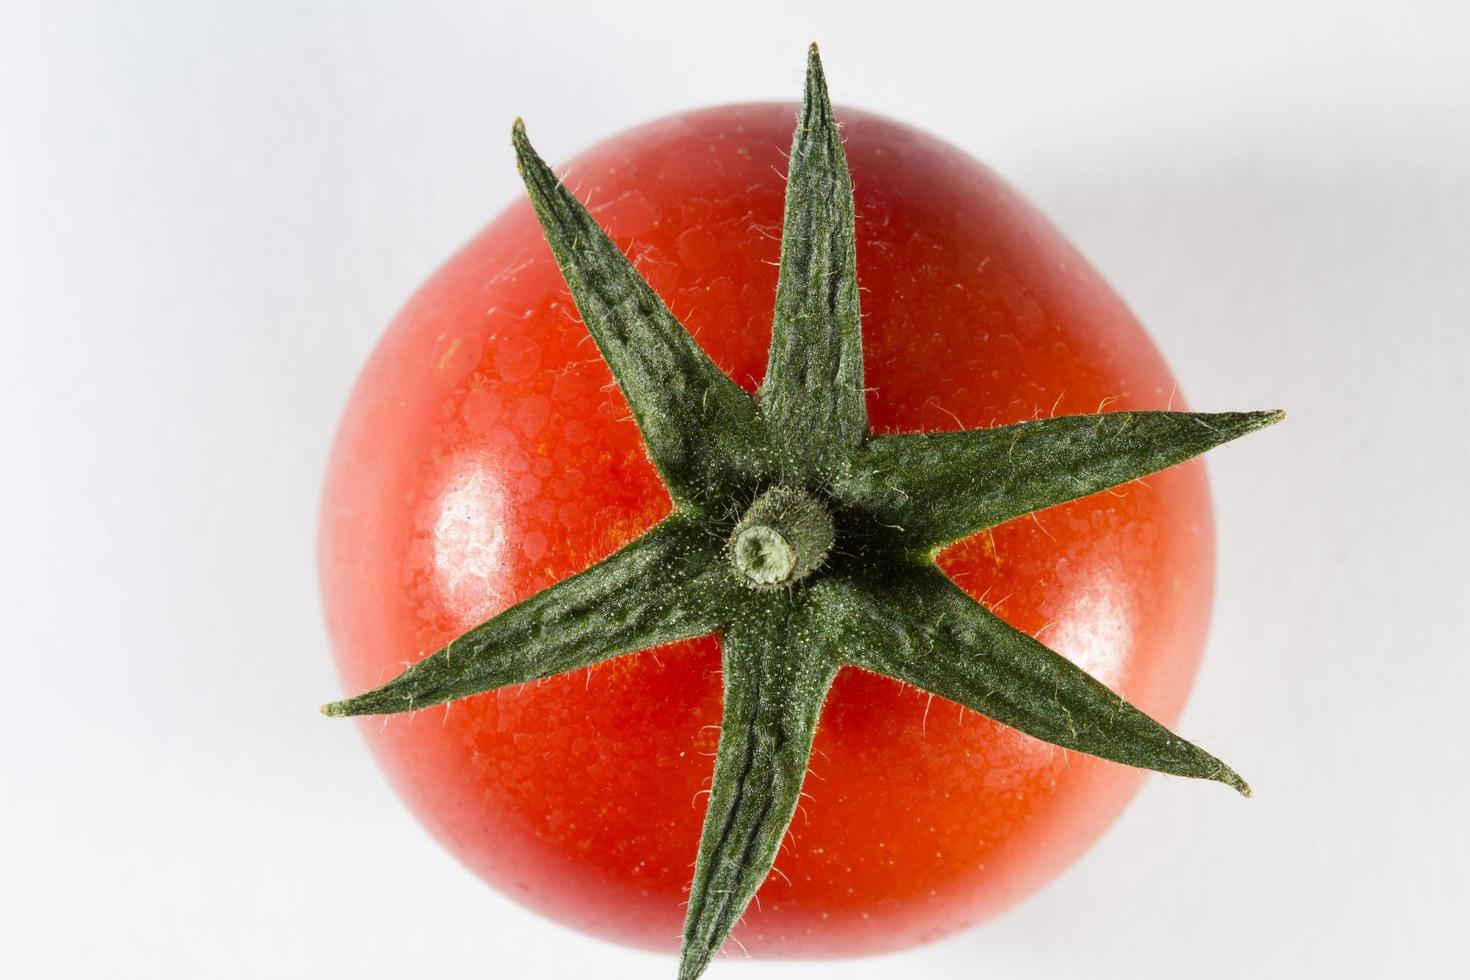 tomate sur fond blanc photo